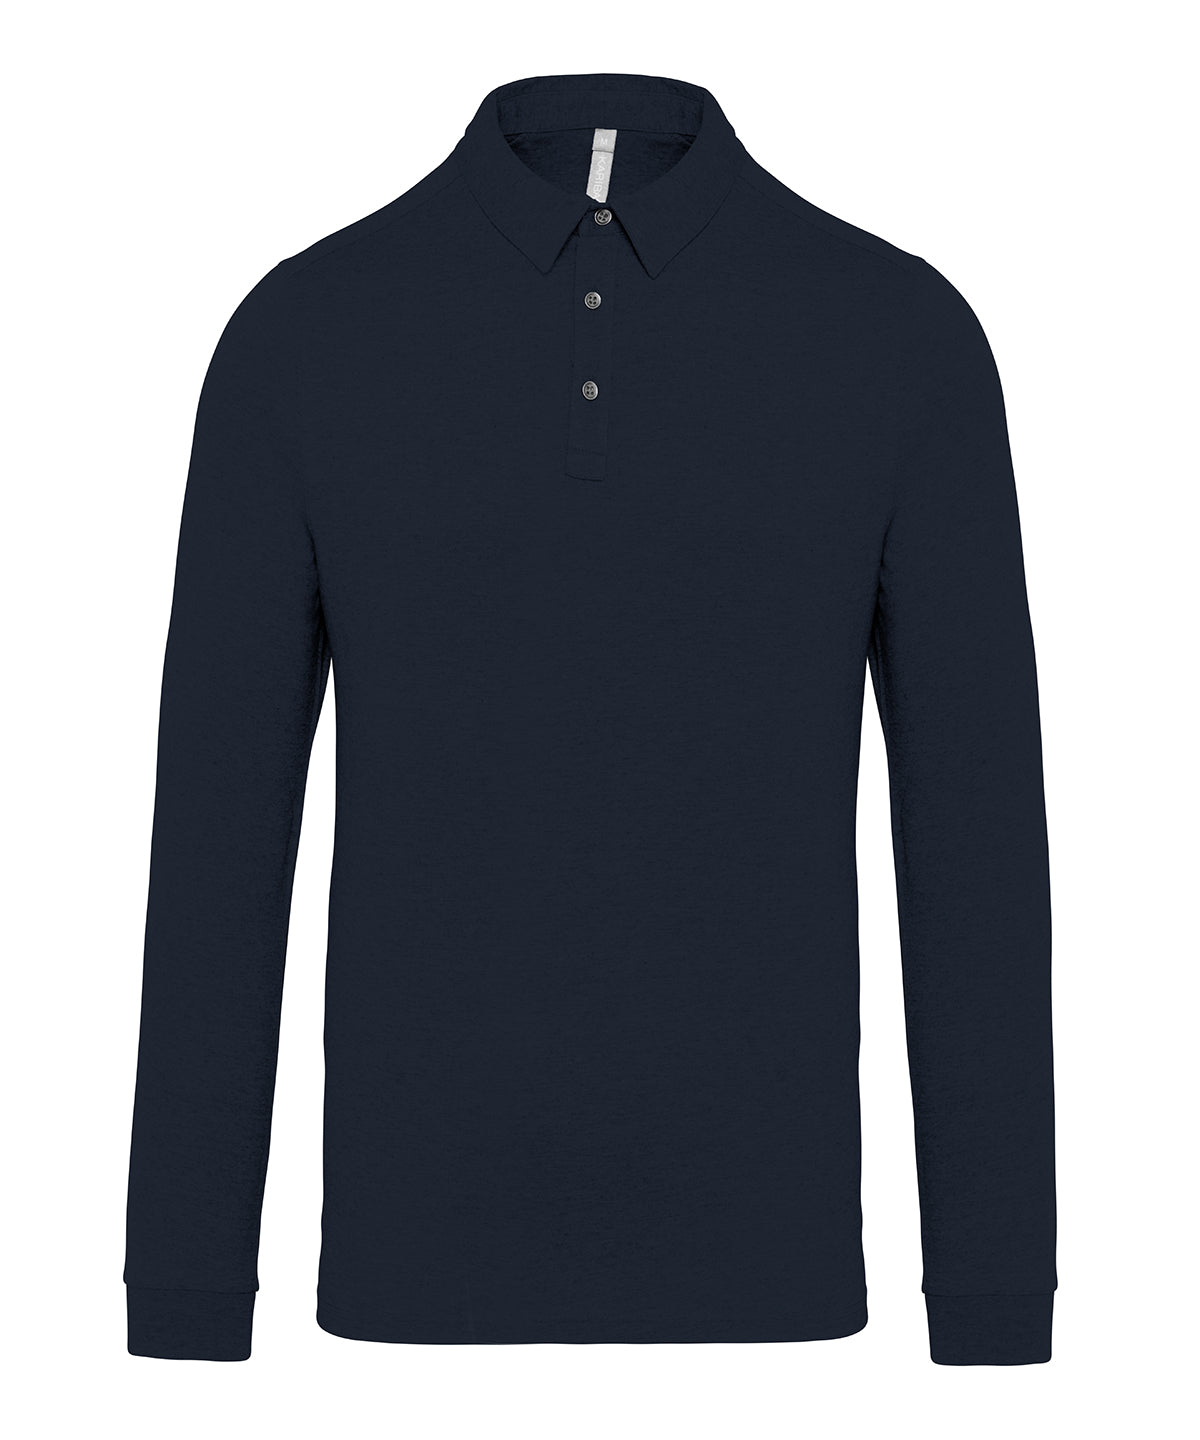 Personalised Polo Shirts - Black Kariban Jersey knit long sleeve polo shirt